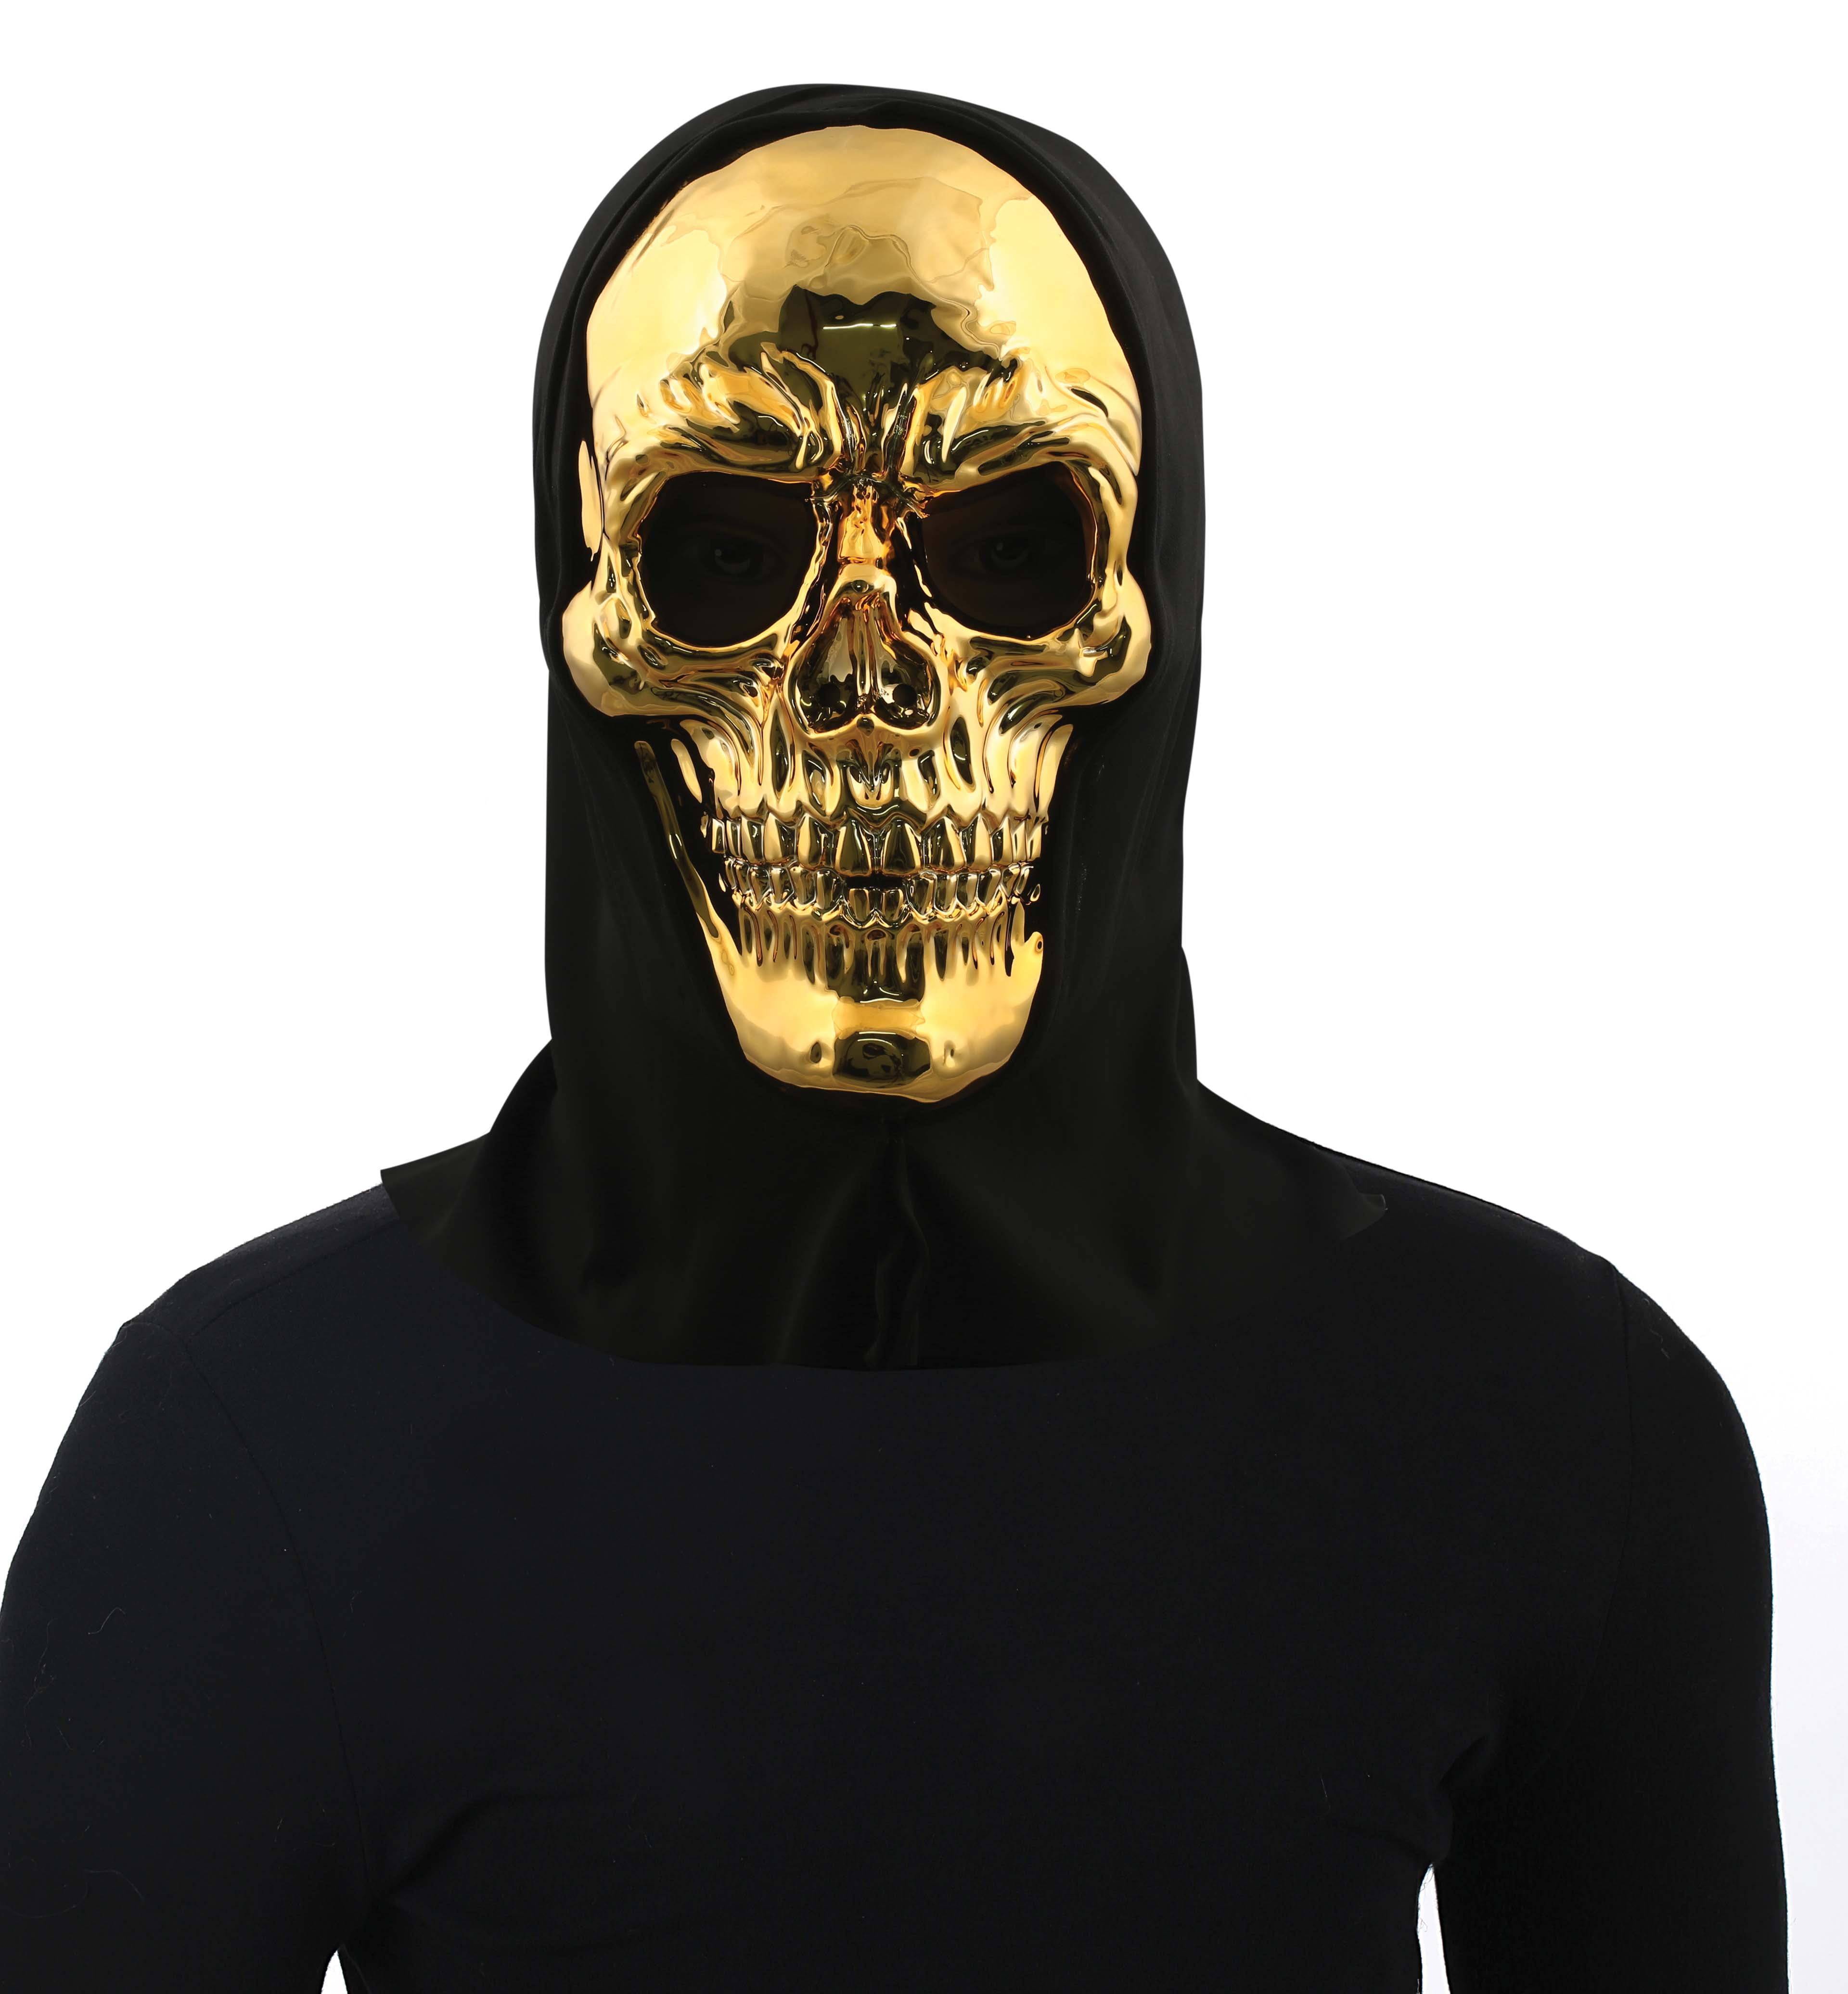 WAY TO CELEBRATE! Gold Polypropylene Halloween Costume Mask